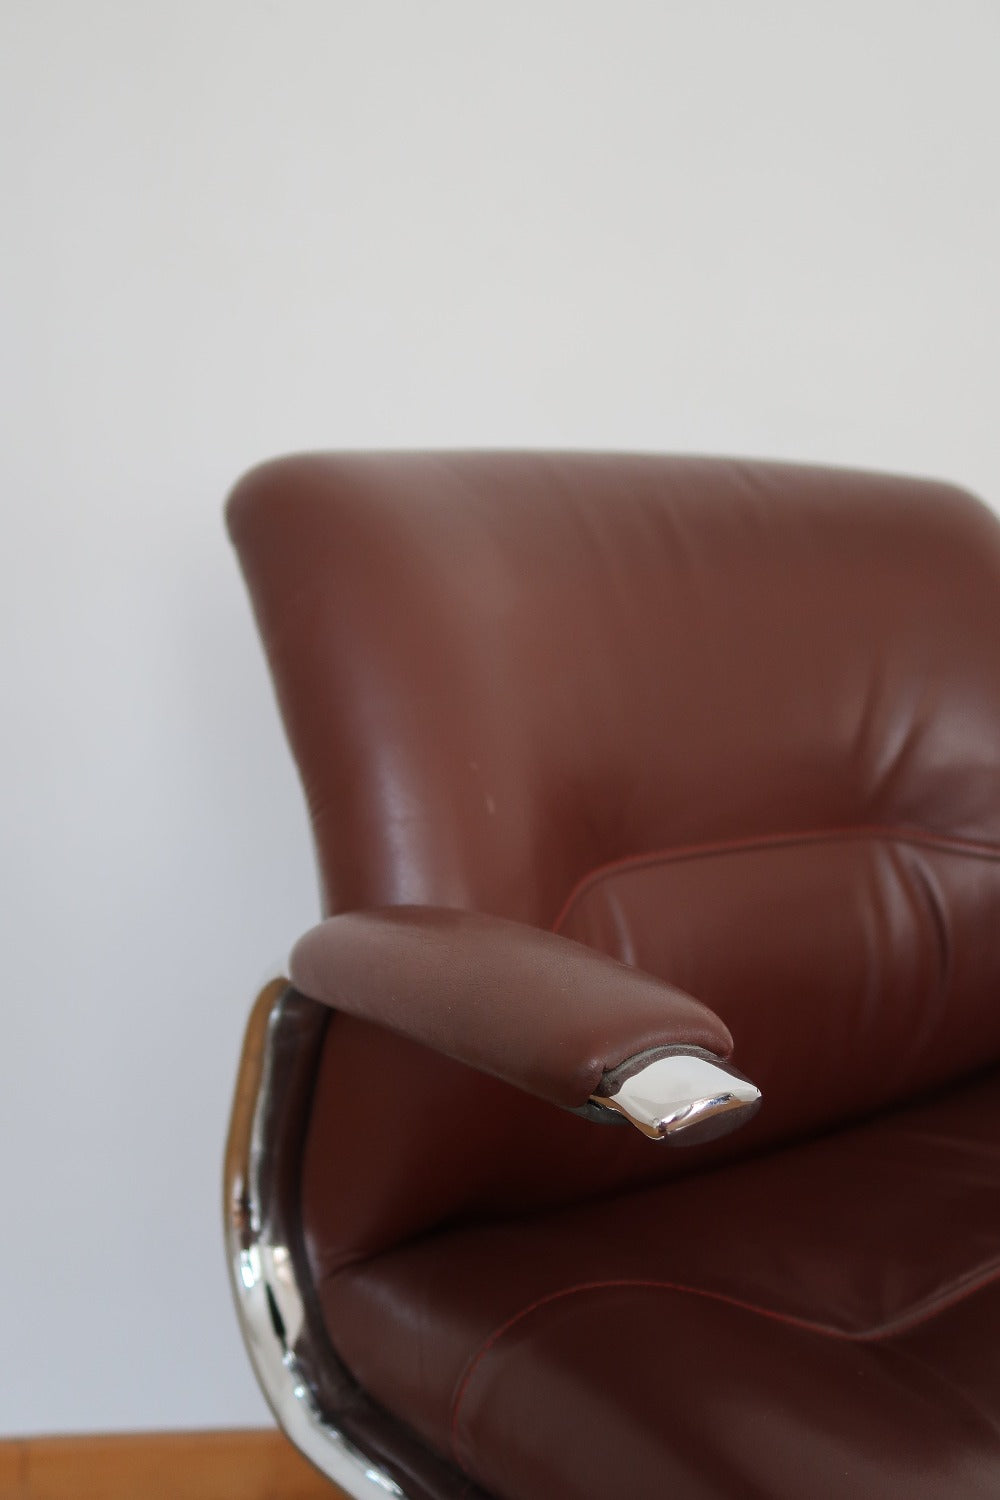 fauteuil bureau skaï cuir bordeau chaise strafor steelcase vintage chrome